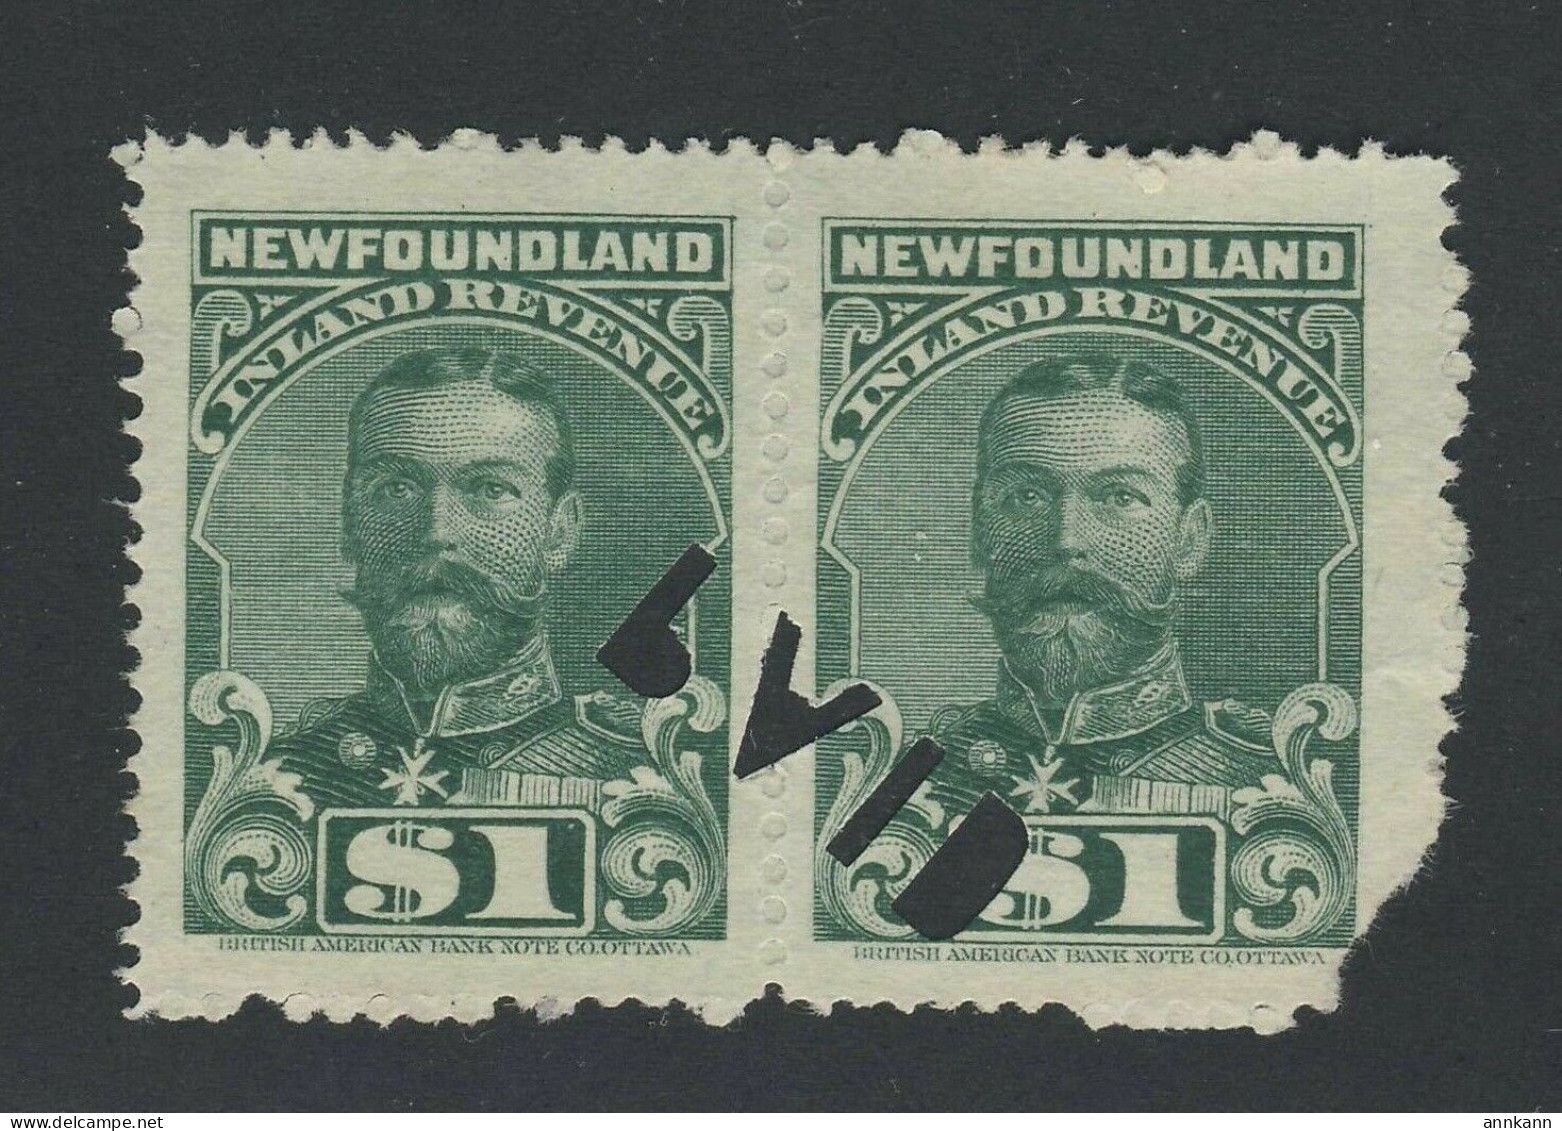 2x Newfoundland Used Inland Revenue Stamps 1910 George V Pair NFR 20-$1.00 - Steuermarken